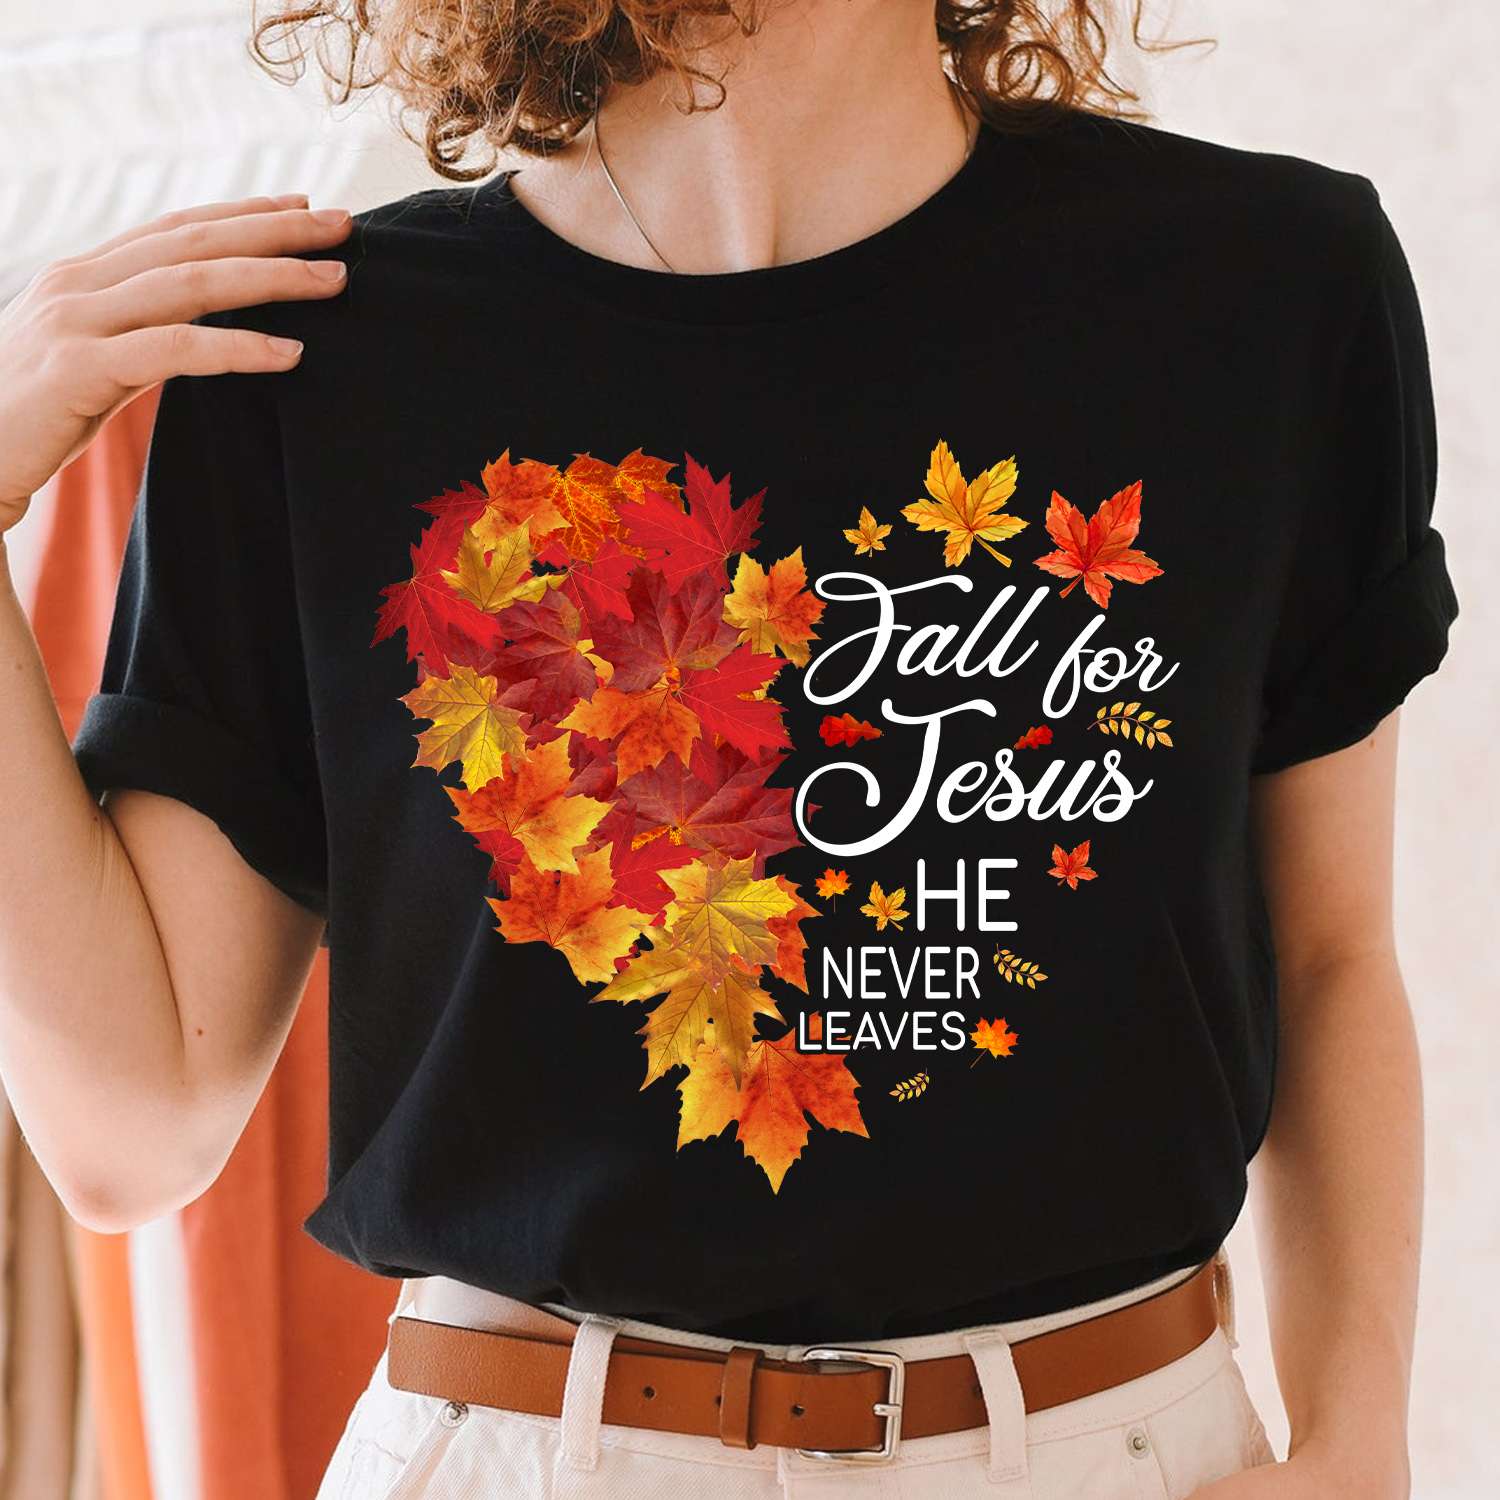 Fall for Jesus he never leaves